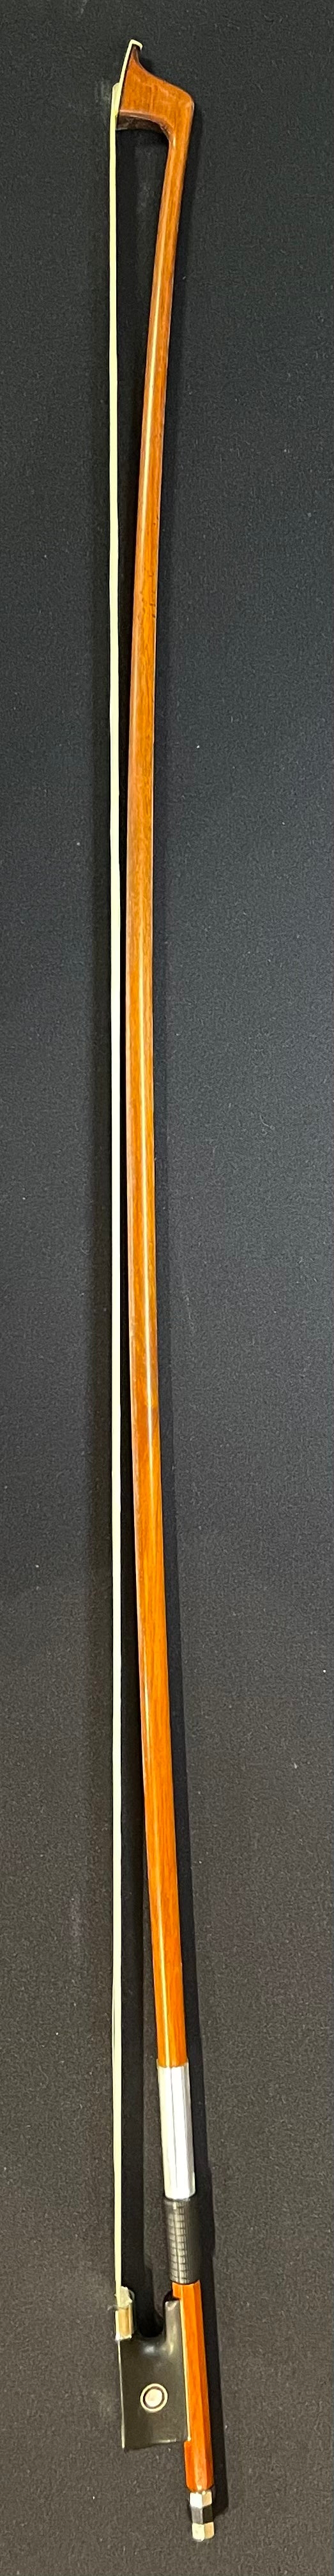 4/4 Violin Bow - TZXS Wood Model